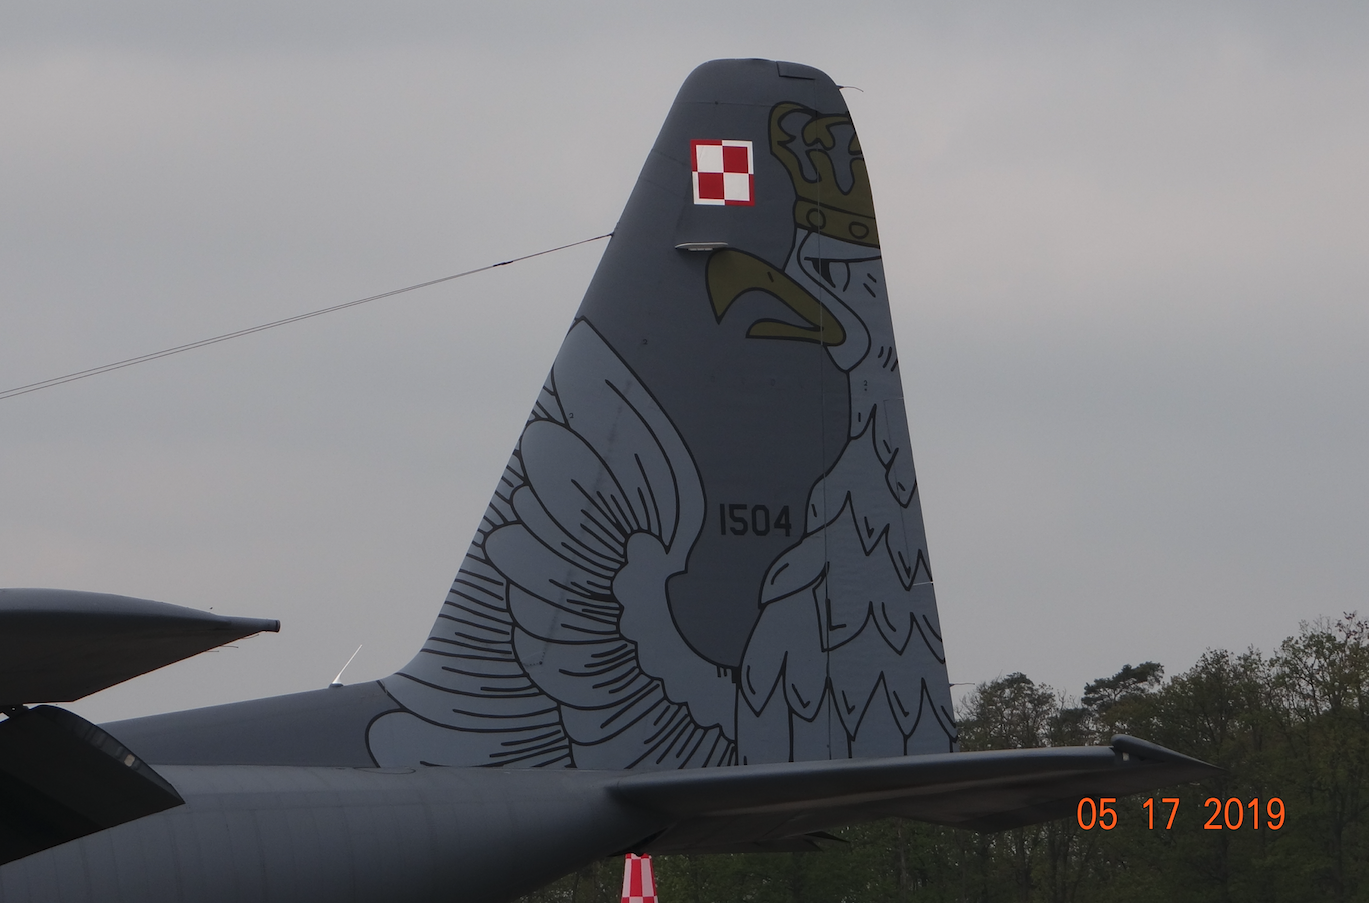 Lockheed C-130 E nb 1504. Powidz 2019 rok. Zdjęcie Karol Placha Hetman